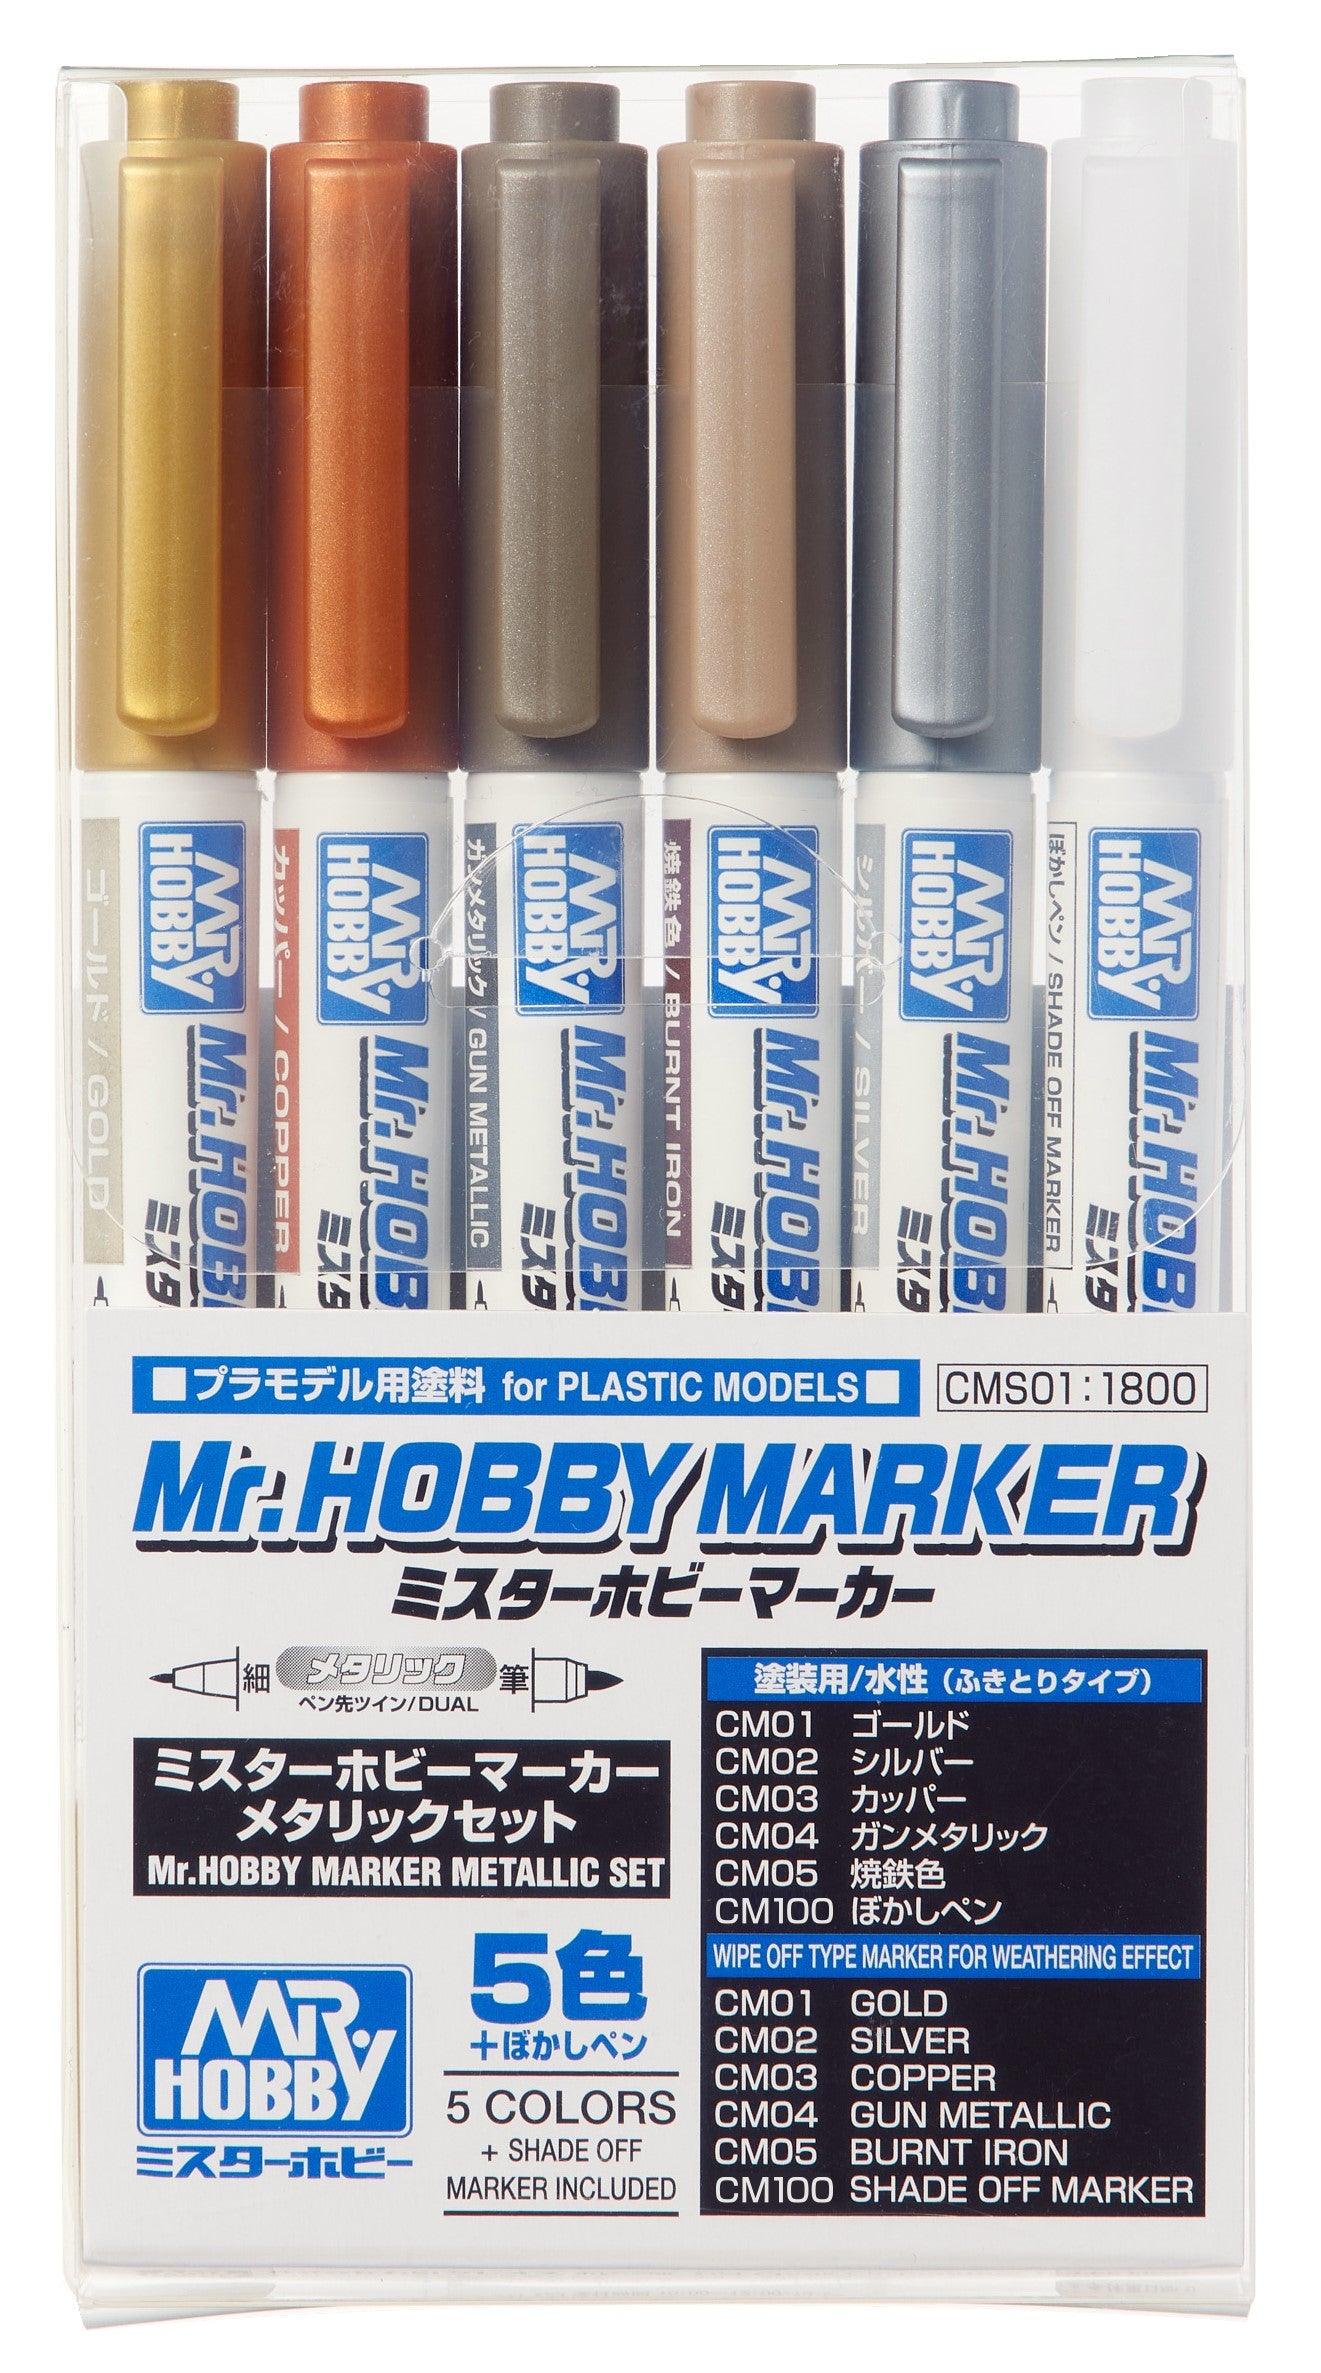 GSI Creos Mr.HOBBY MARKER: CMS01 Mr.HOBBY MARKER METALLIC SET - SaQra Mart Hobby